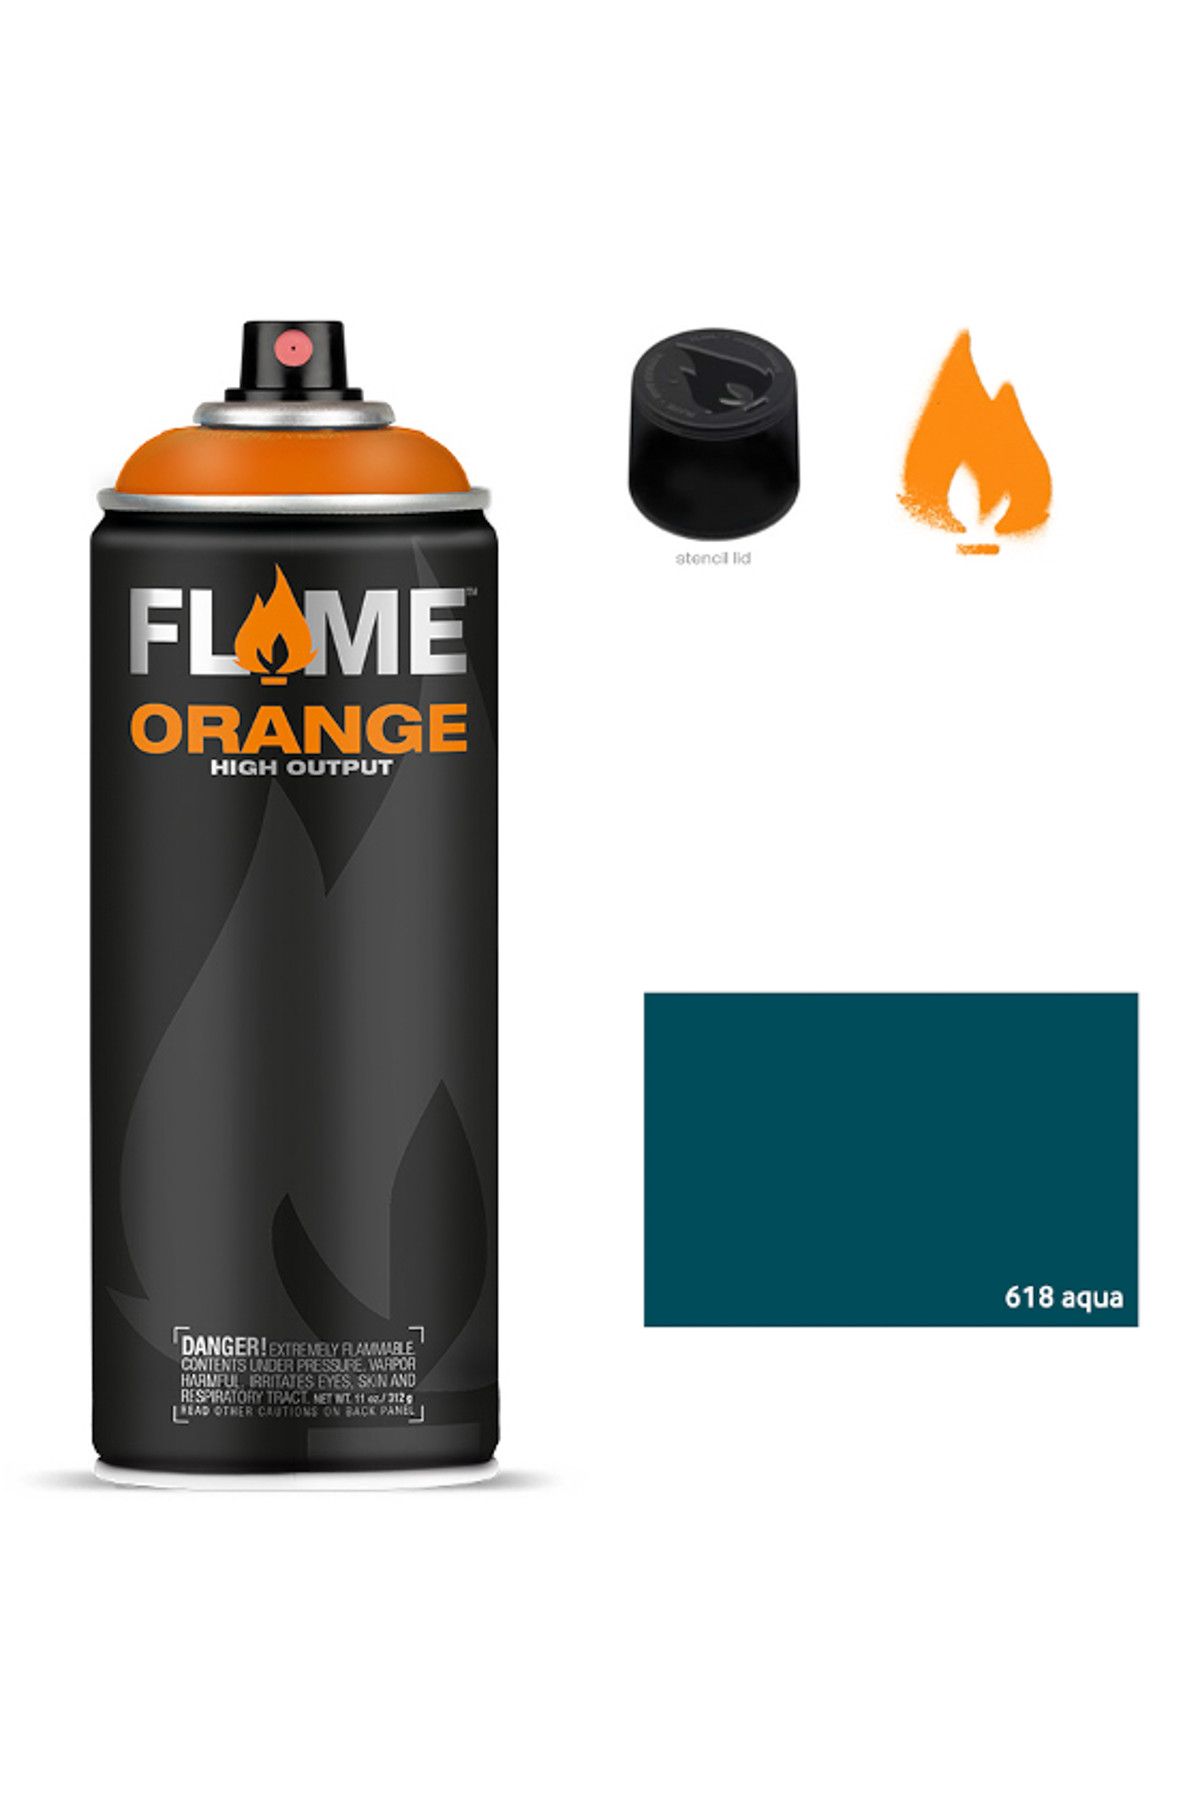 Flame Orange 400ml Sprey Boya N:618 Aqua 5699999